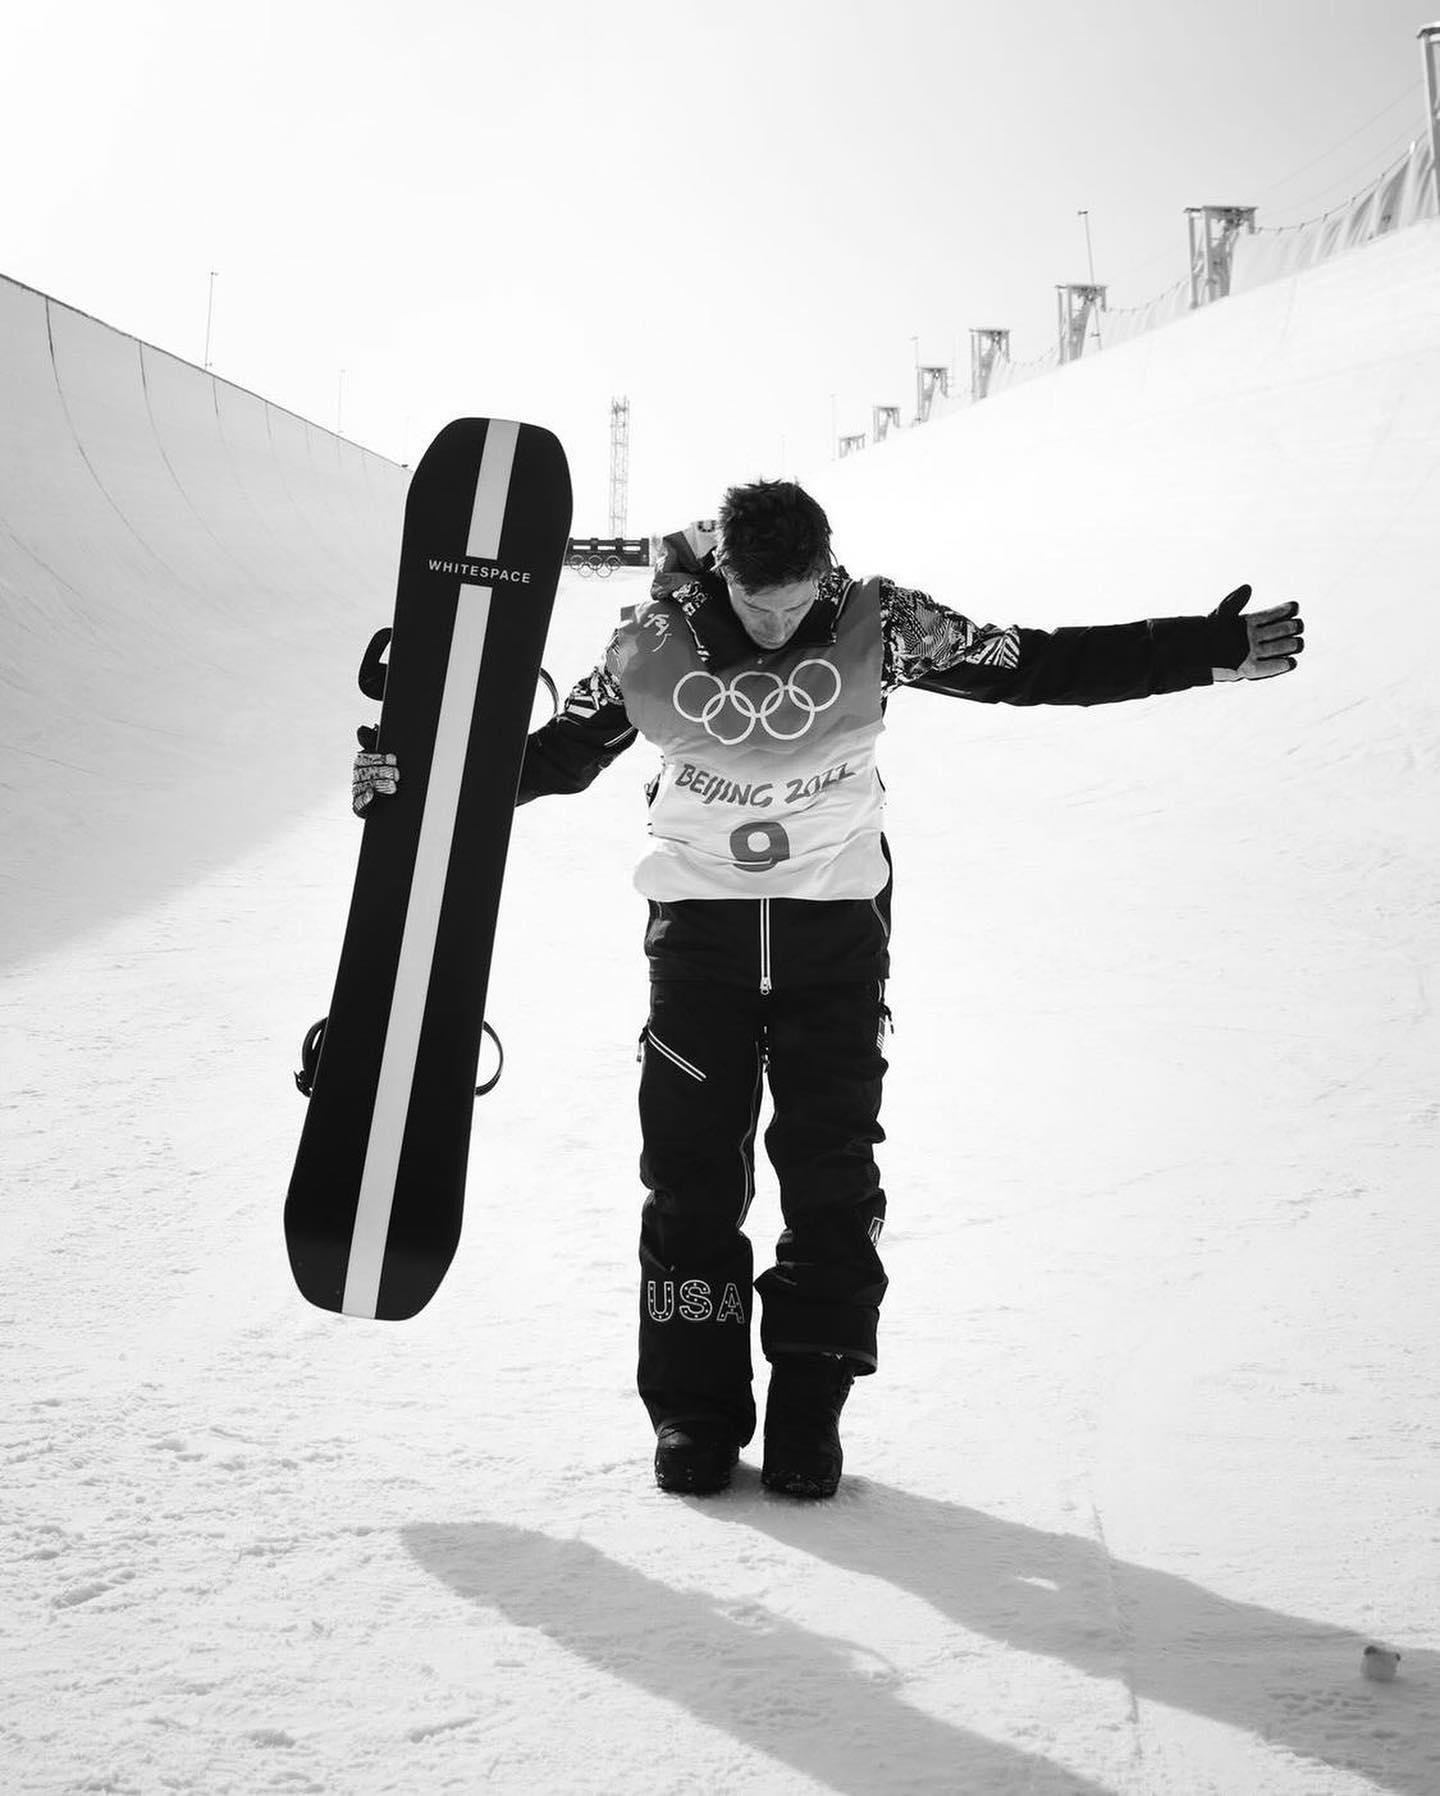 Shaun White at the 2022 Winter Olympics